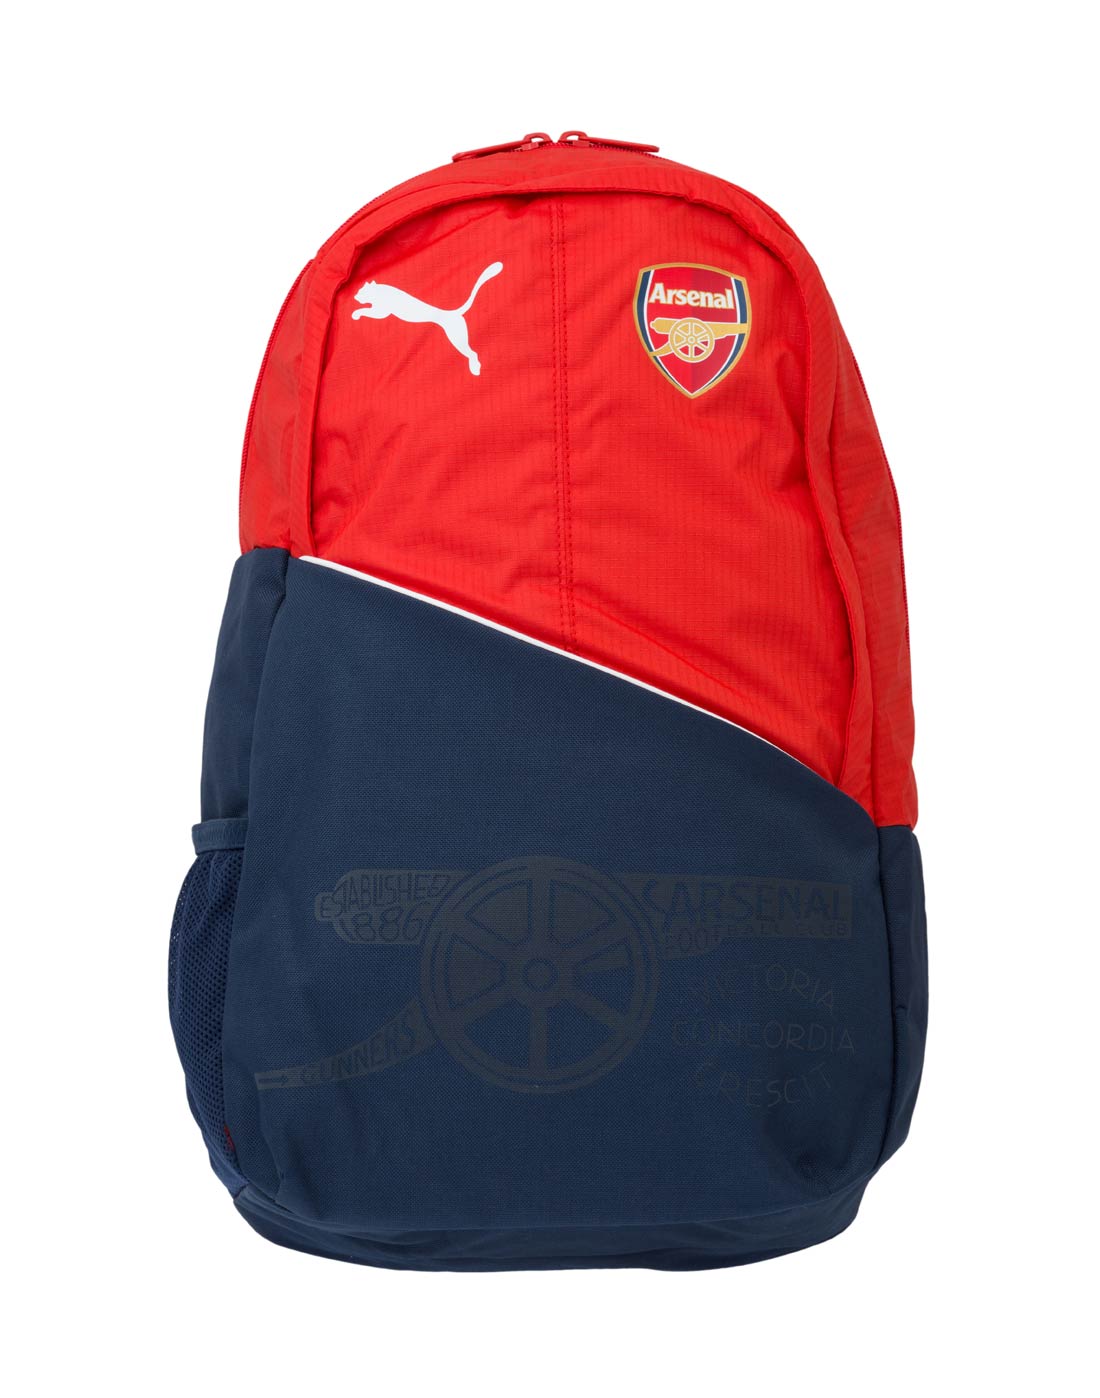 Puma Arsenal Backpack | Life Style Sports